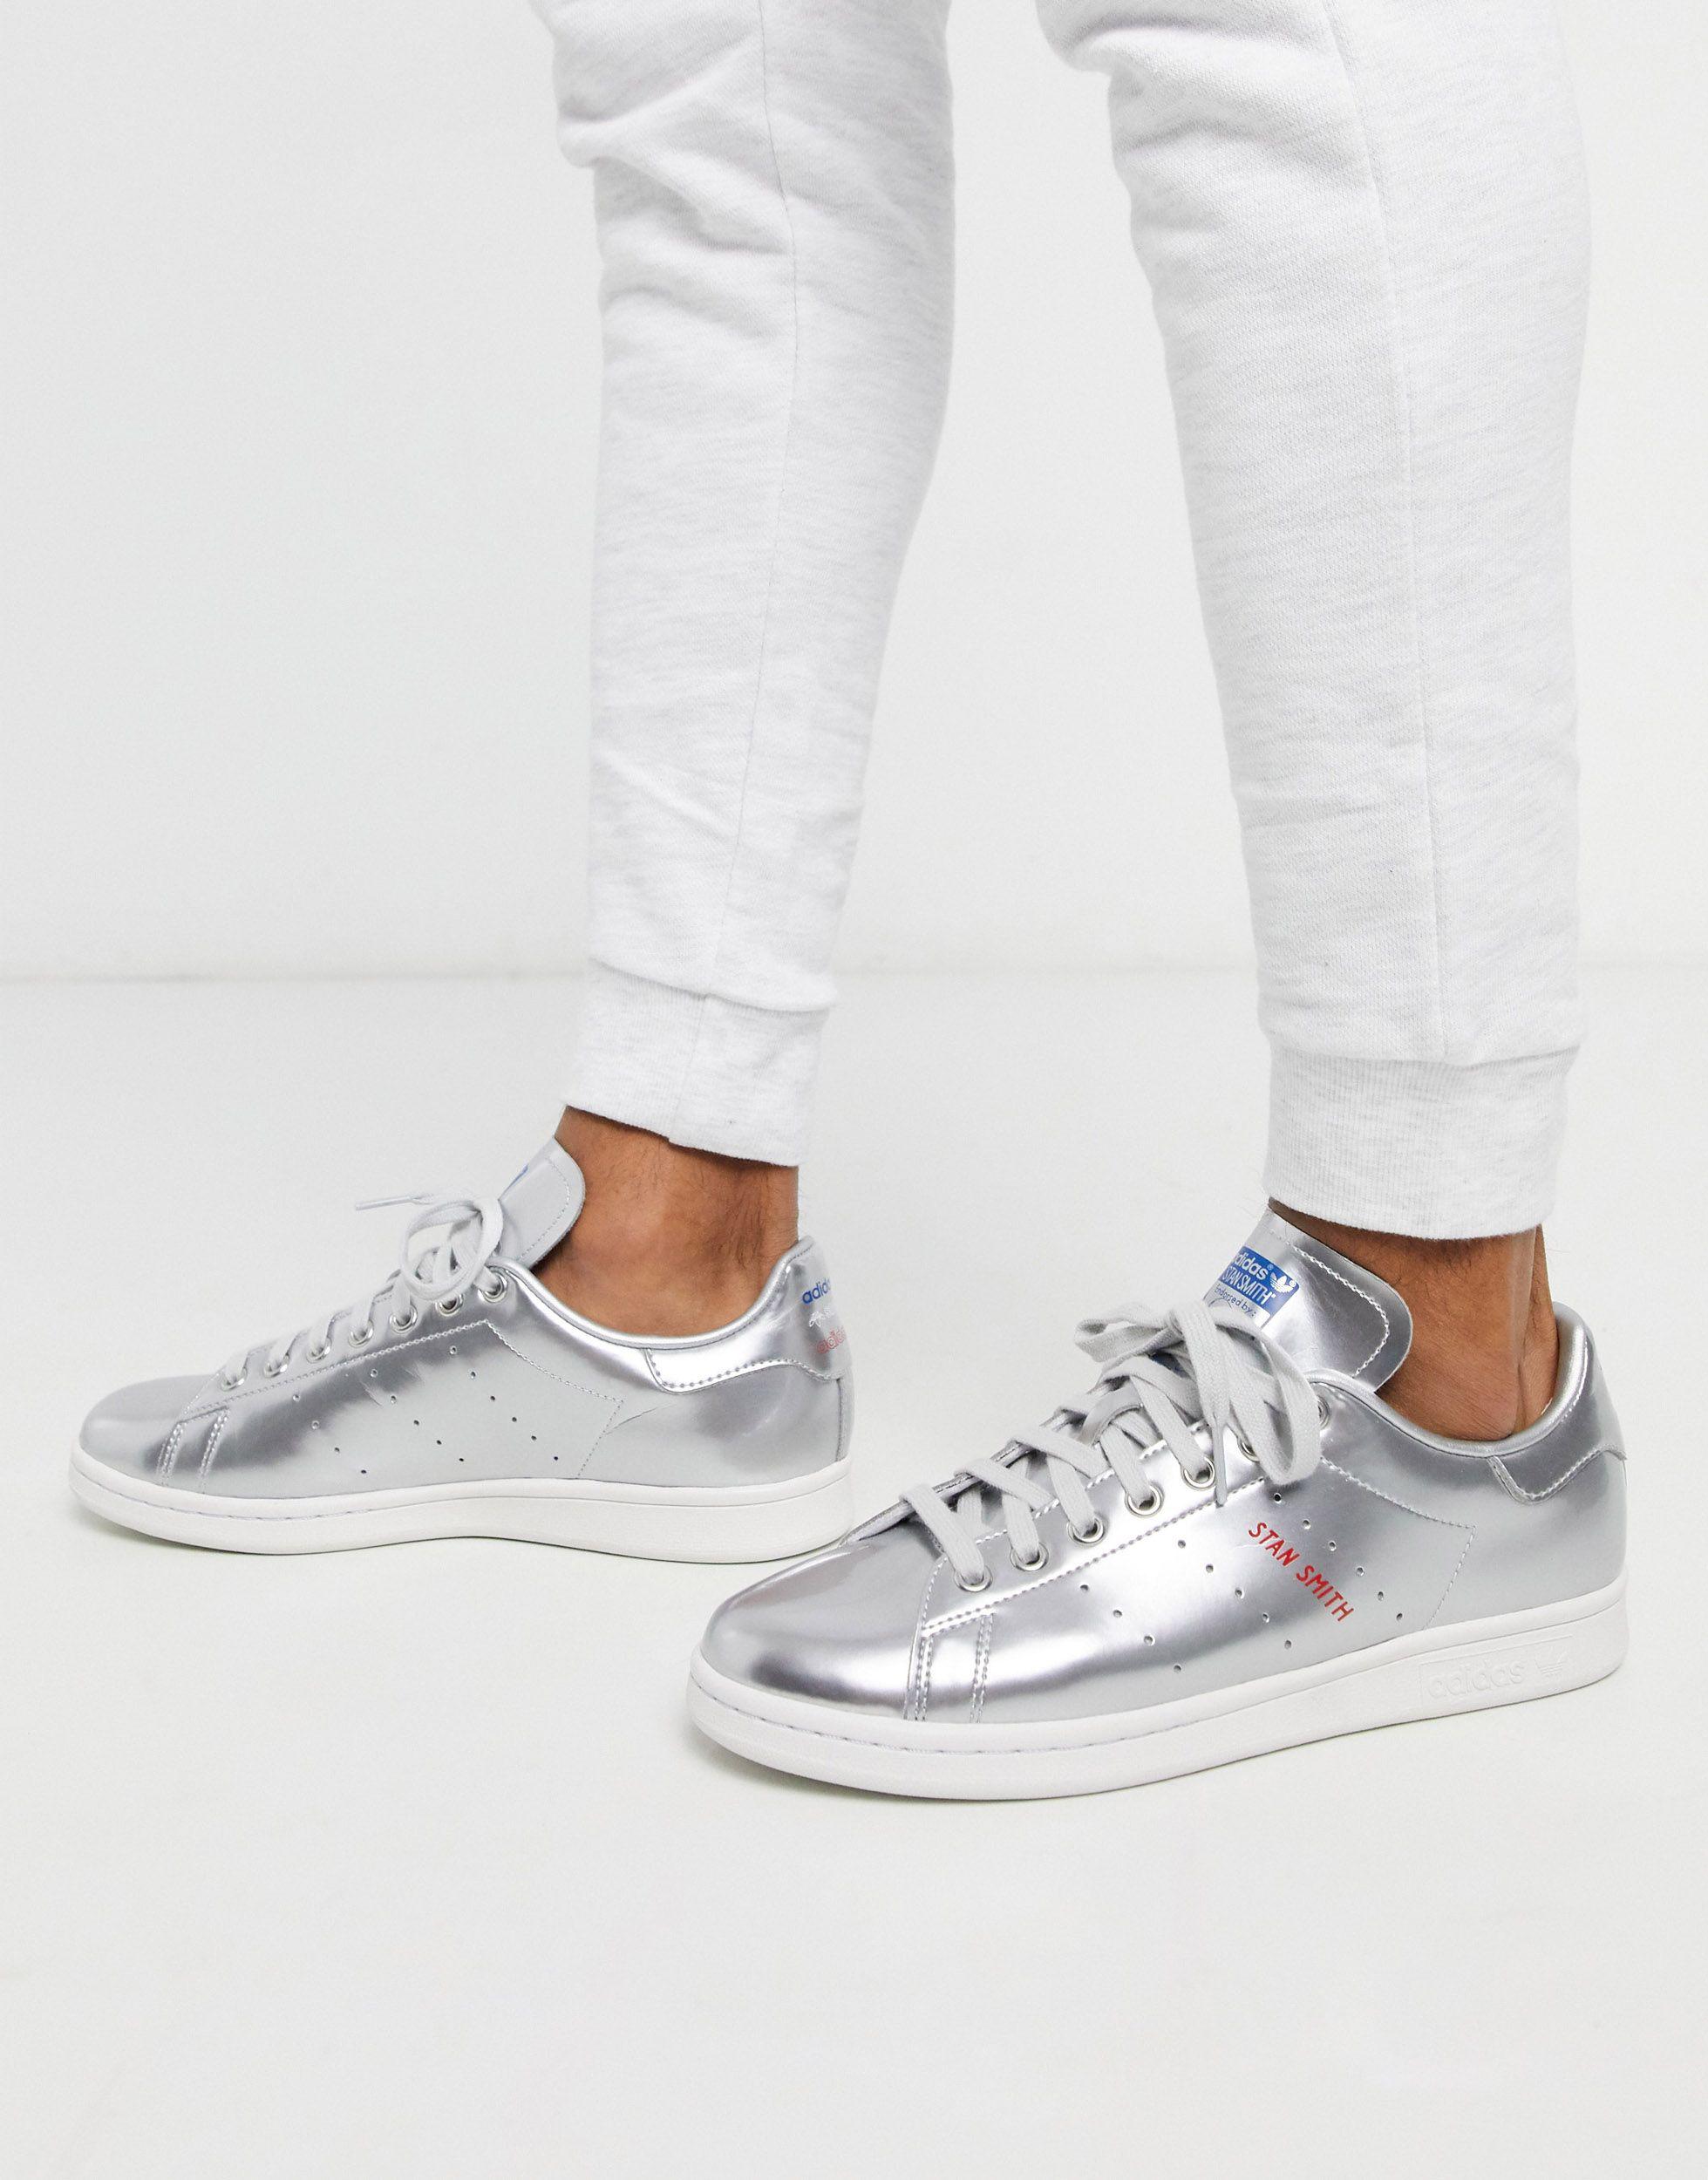 adidas Originals S Stan Smith Sneaker in Silver Metallic/Silver Metallic/ ( Metallic) for Men - Save 64% | Lyst